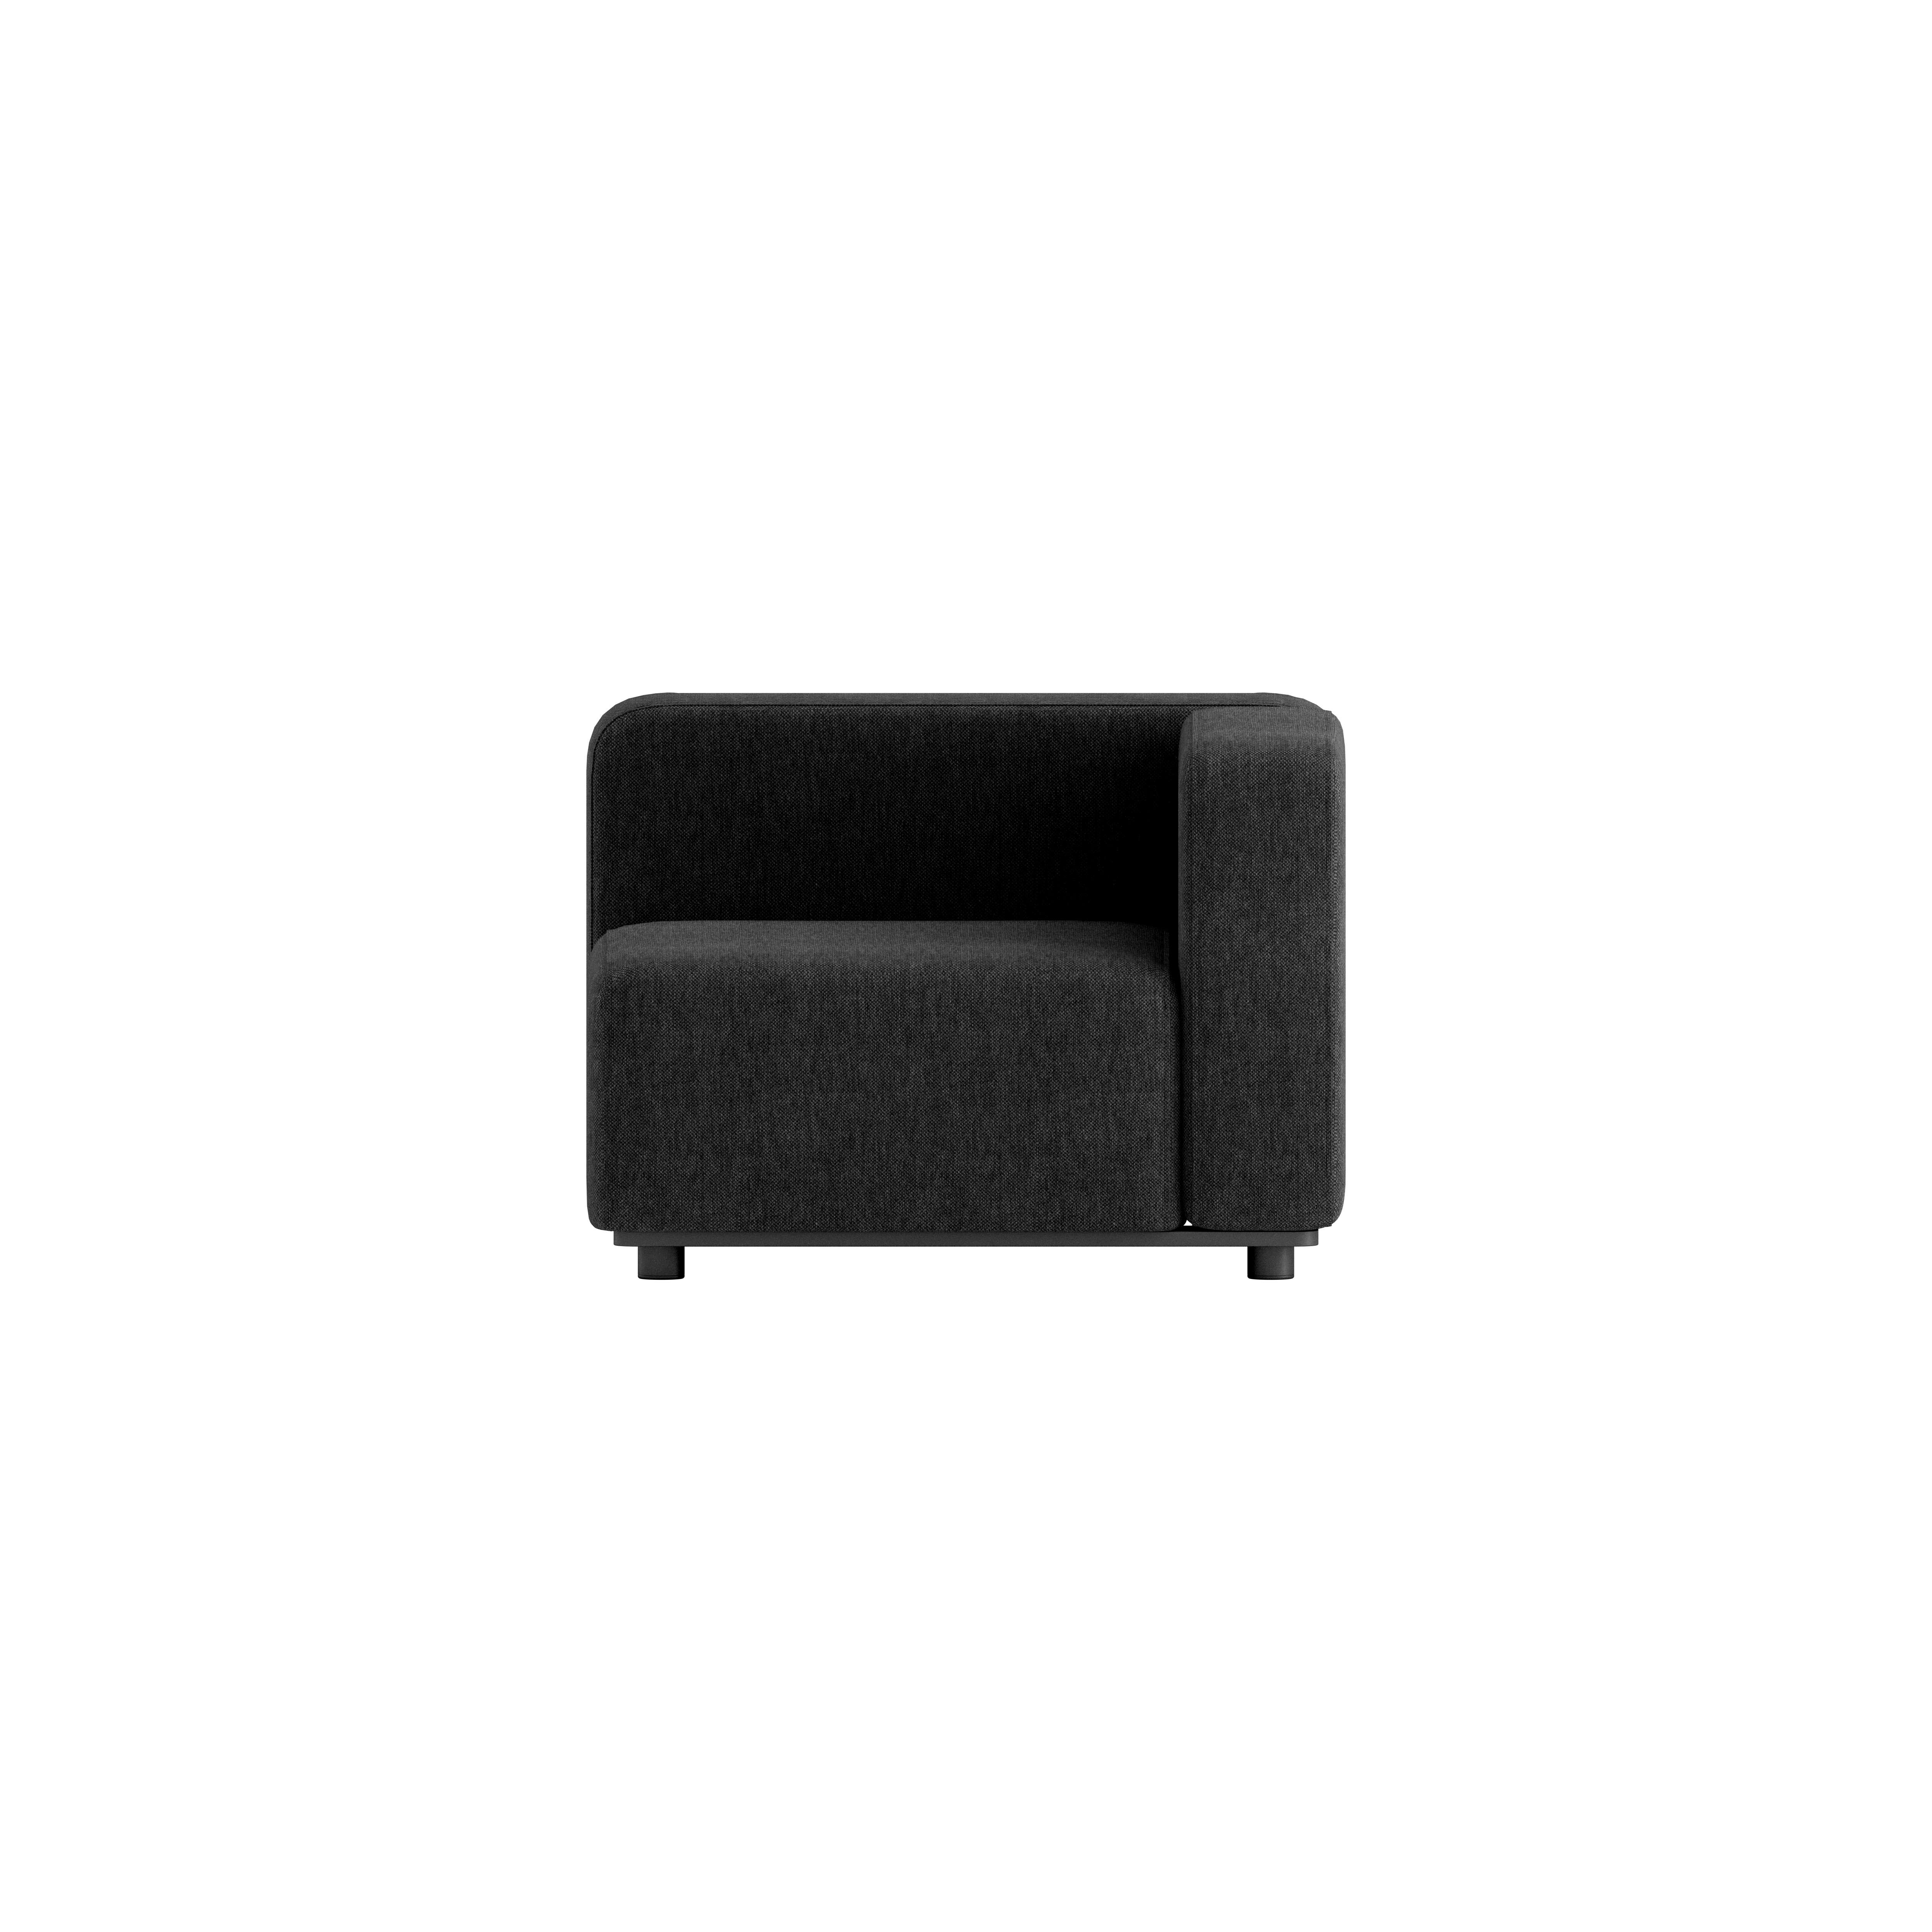 SACKit Cobana Lounge Sofa - Eckelement, Farbe: Cobana Black